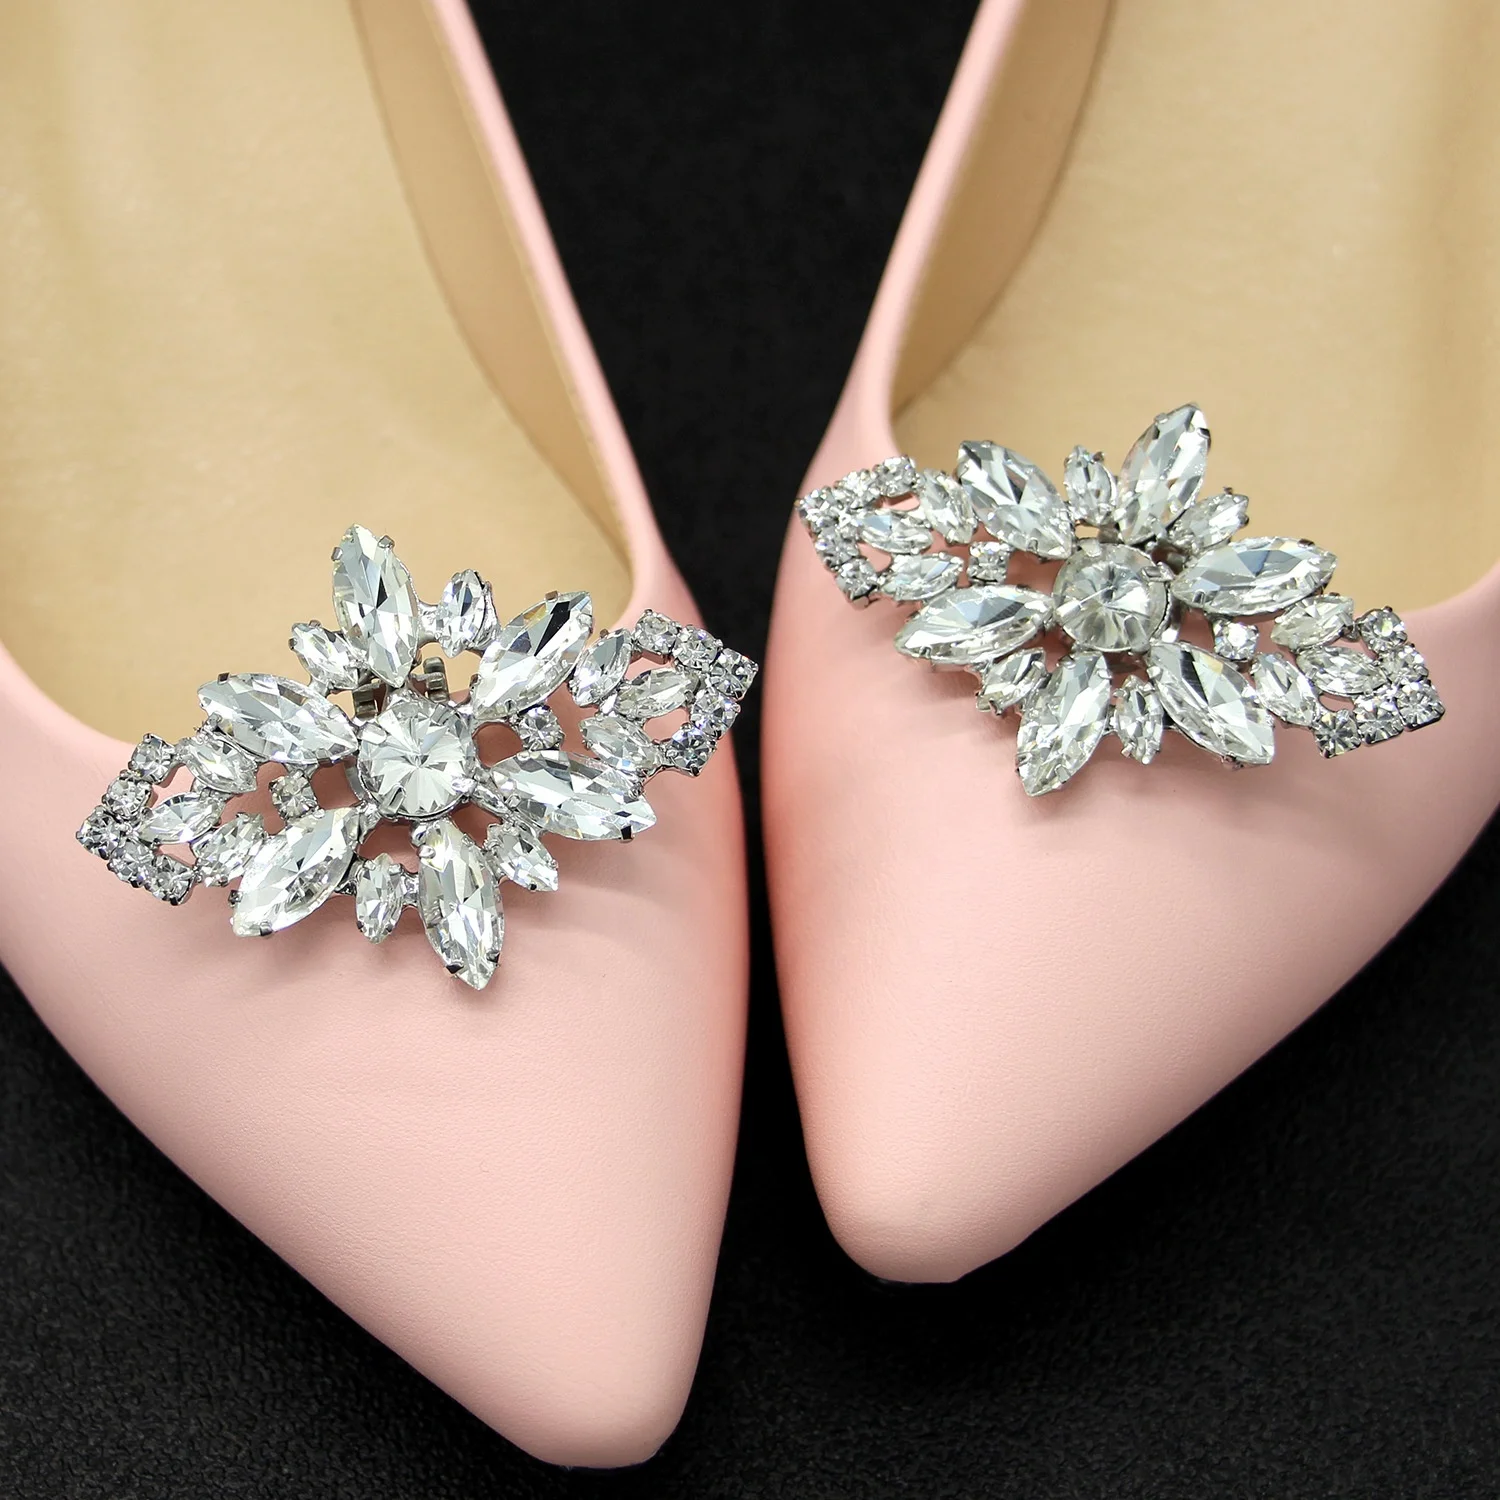 

XILIANGFEIZI Fashion Rhinestone Shoe Charms Metal Bling Wedding High Heel Accessories Crystal Buckle Shoe Flower Buckles